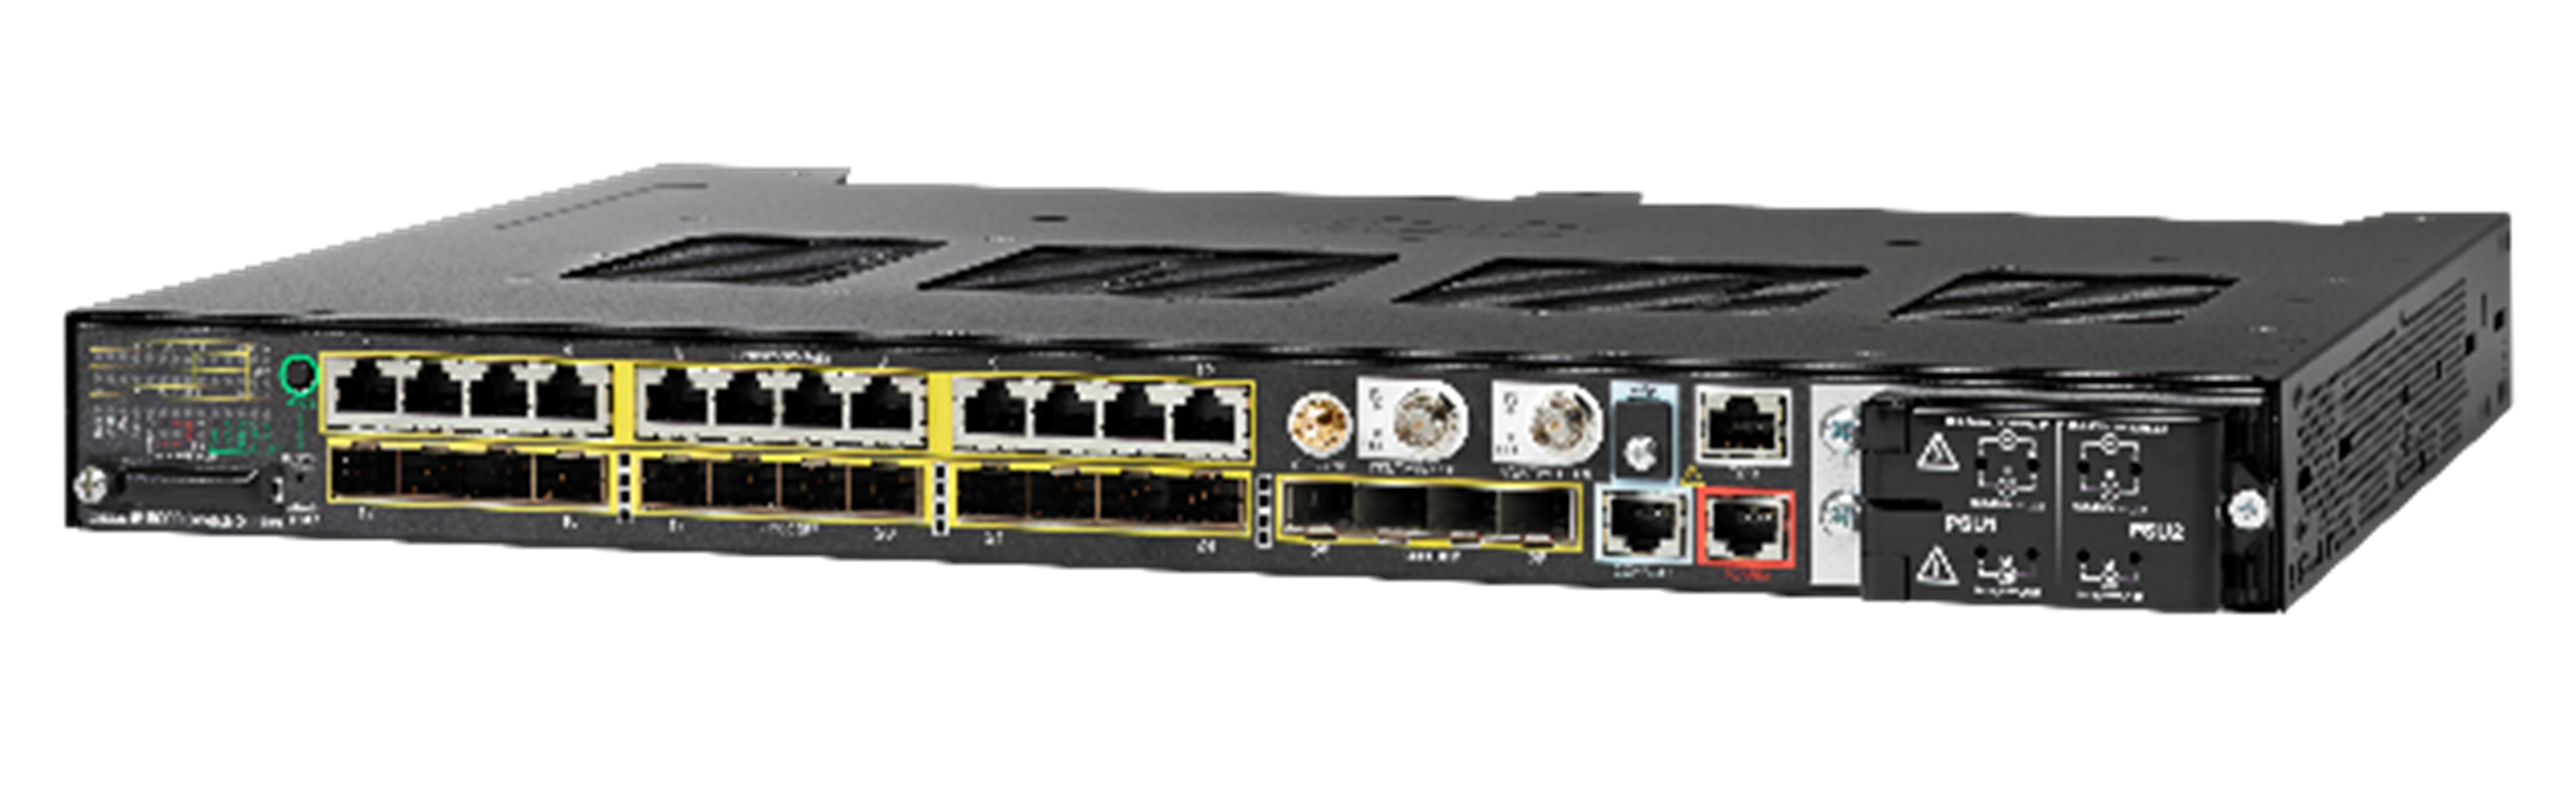 Cisco Industrial Router and Gateway Portfolio